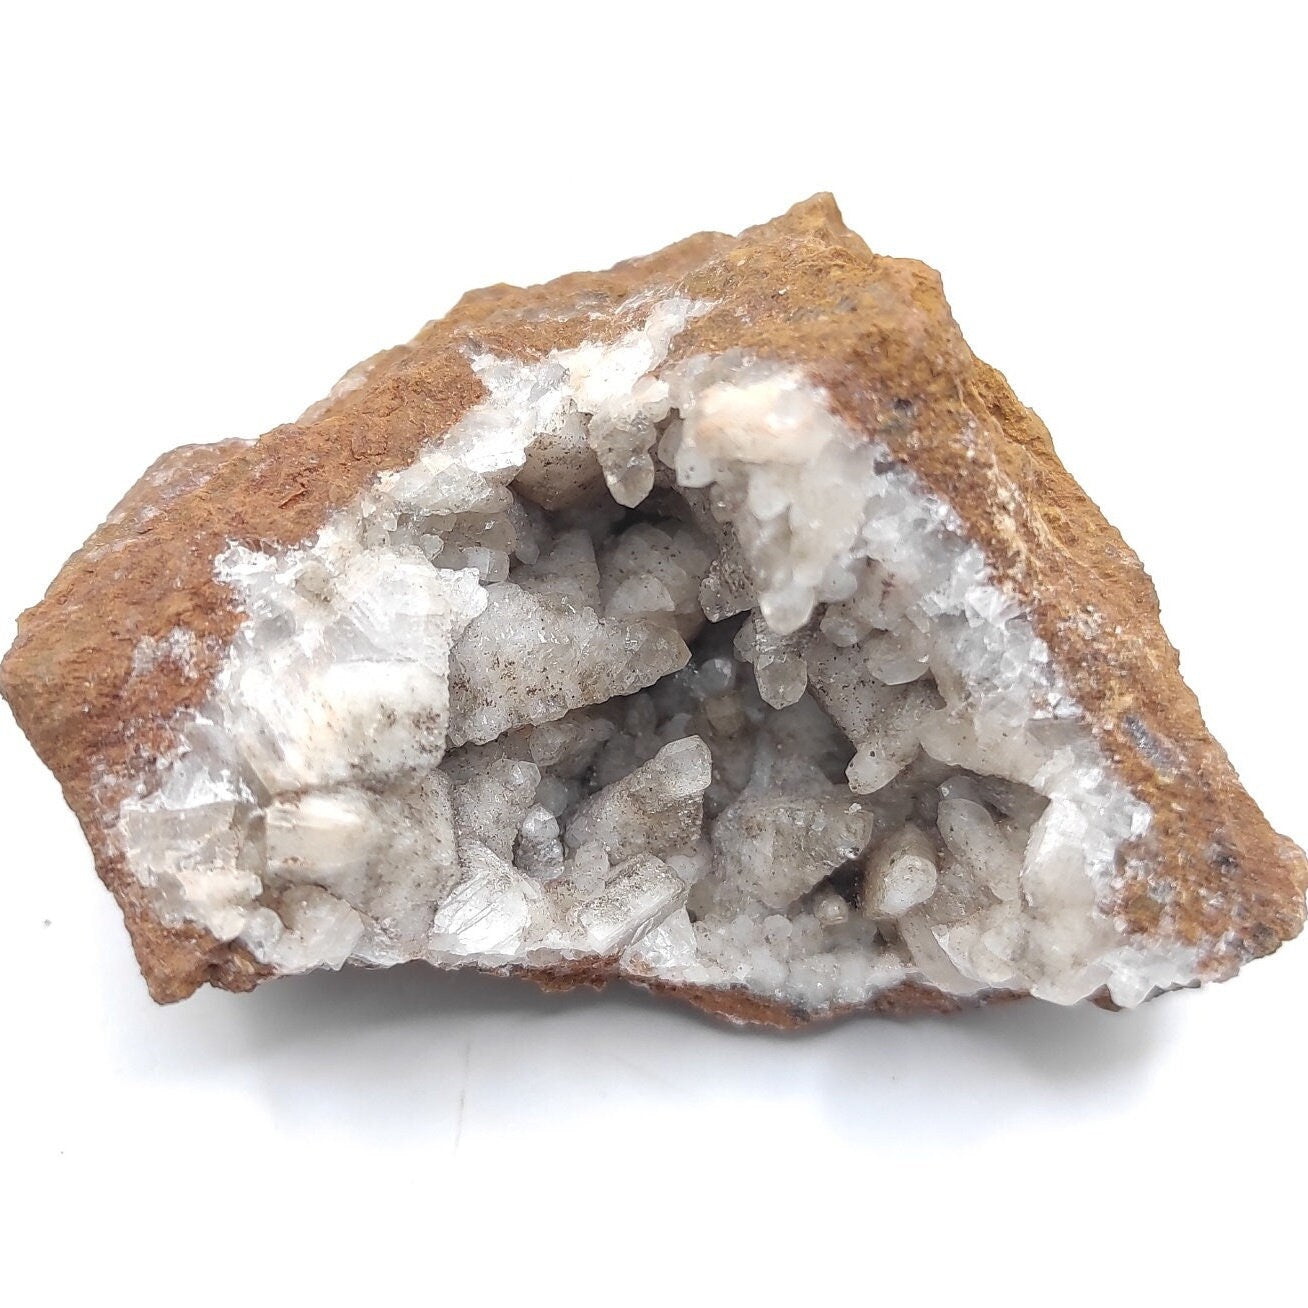 45g UV Reactive Calcite - Phosphorescent Calcite Specimen - Cambridge Cove, Nova Scotia, Canada - UV Minerals - Minerals with Afterglow